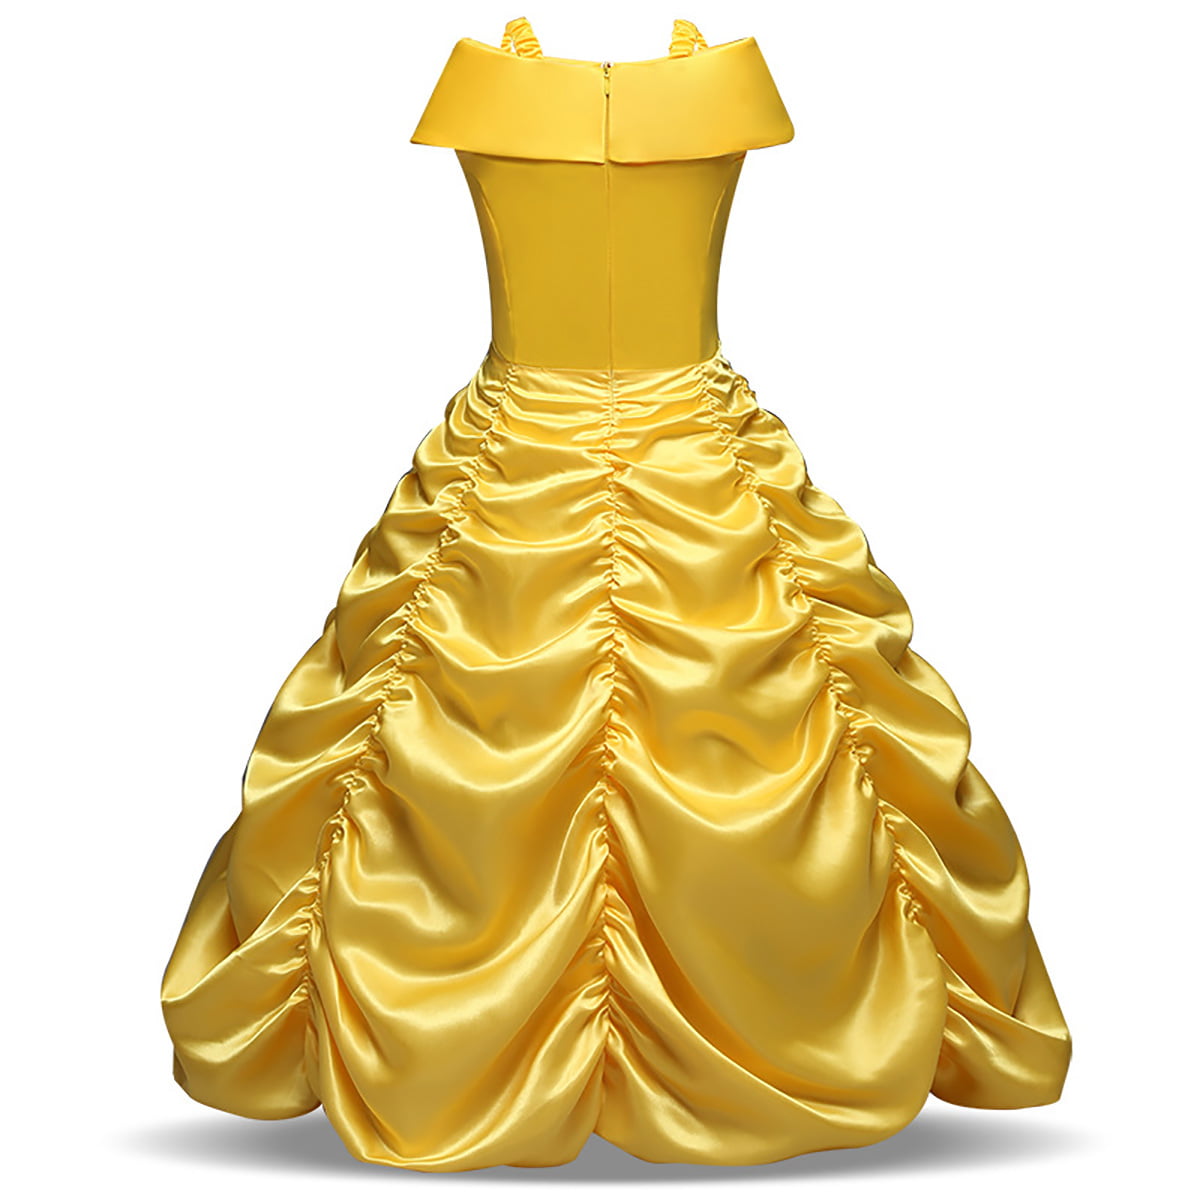 princess belle costume